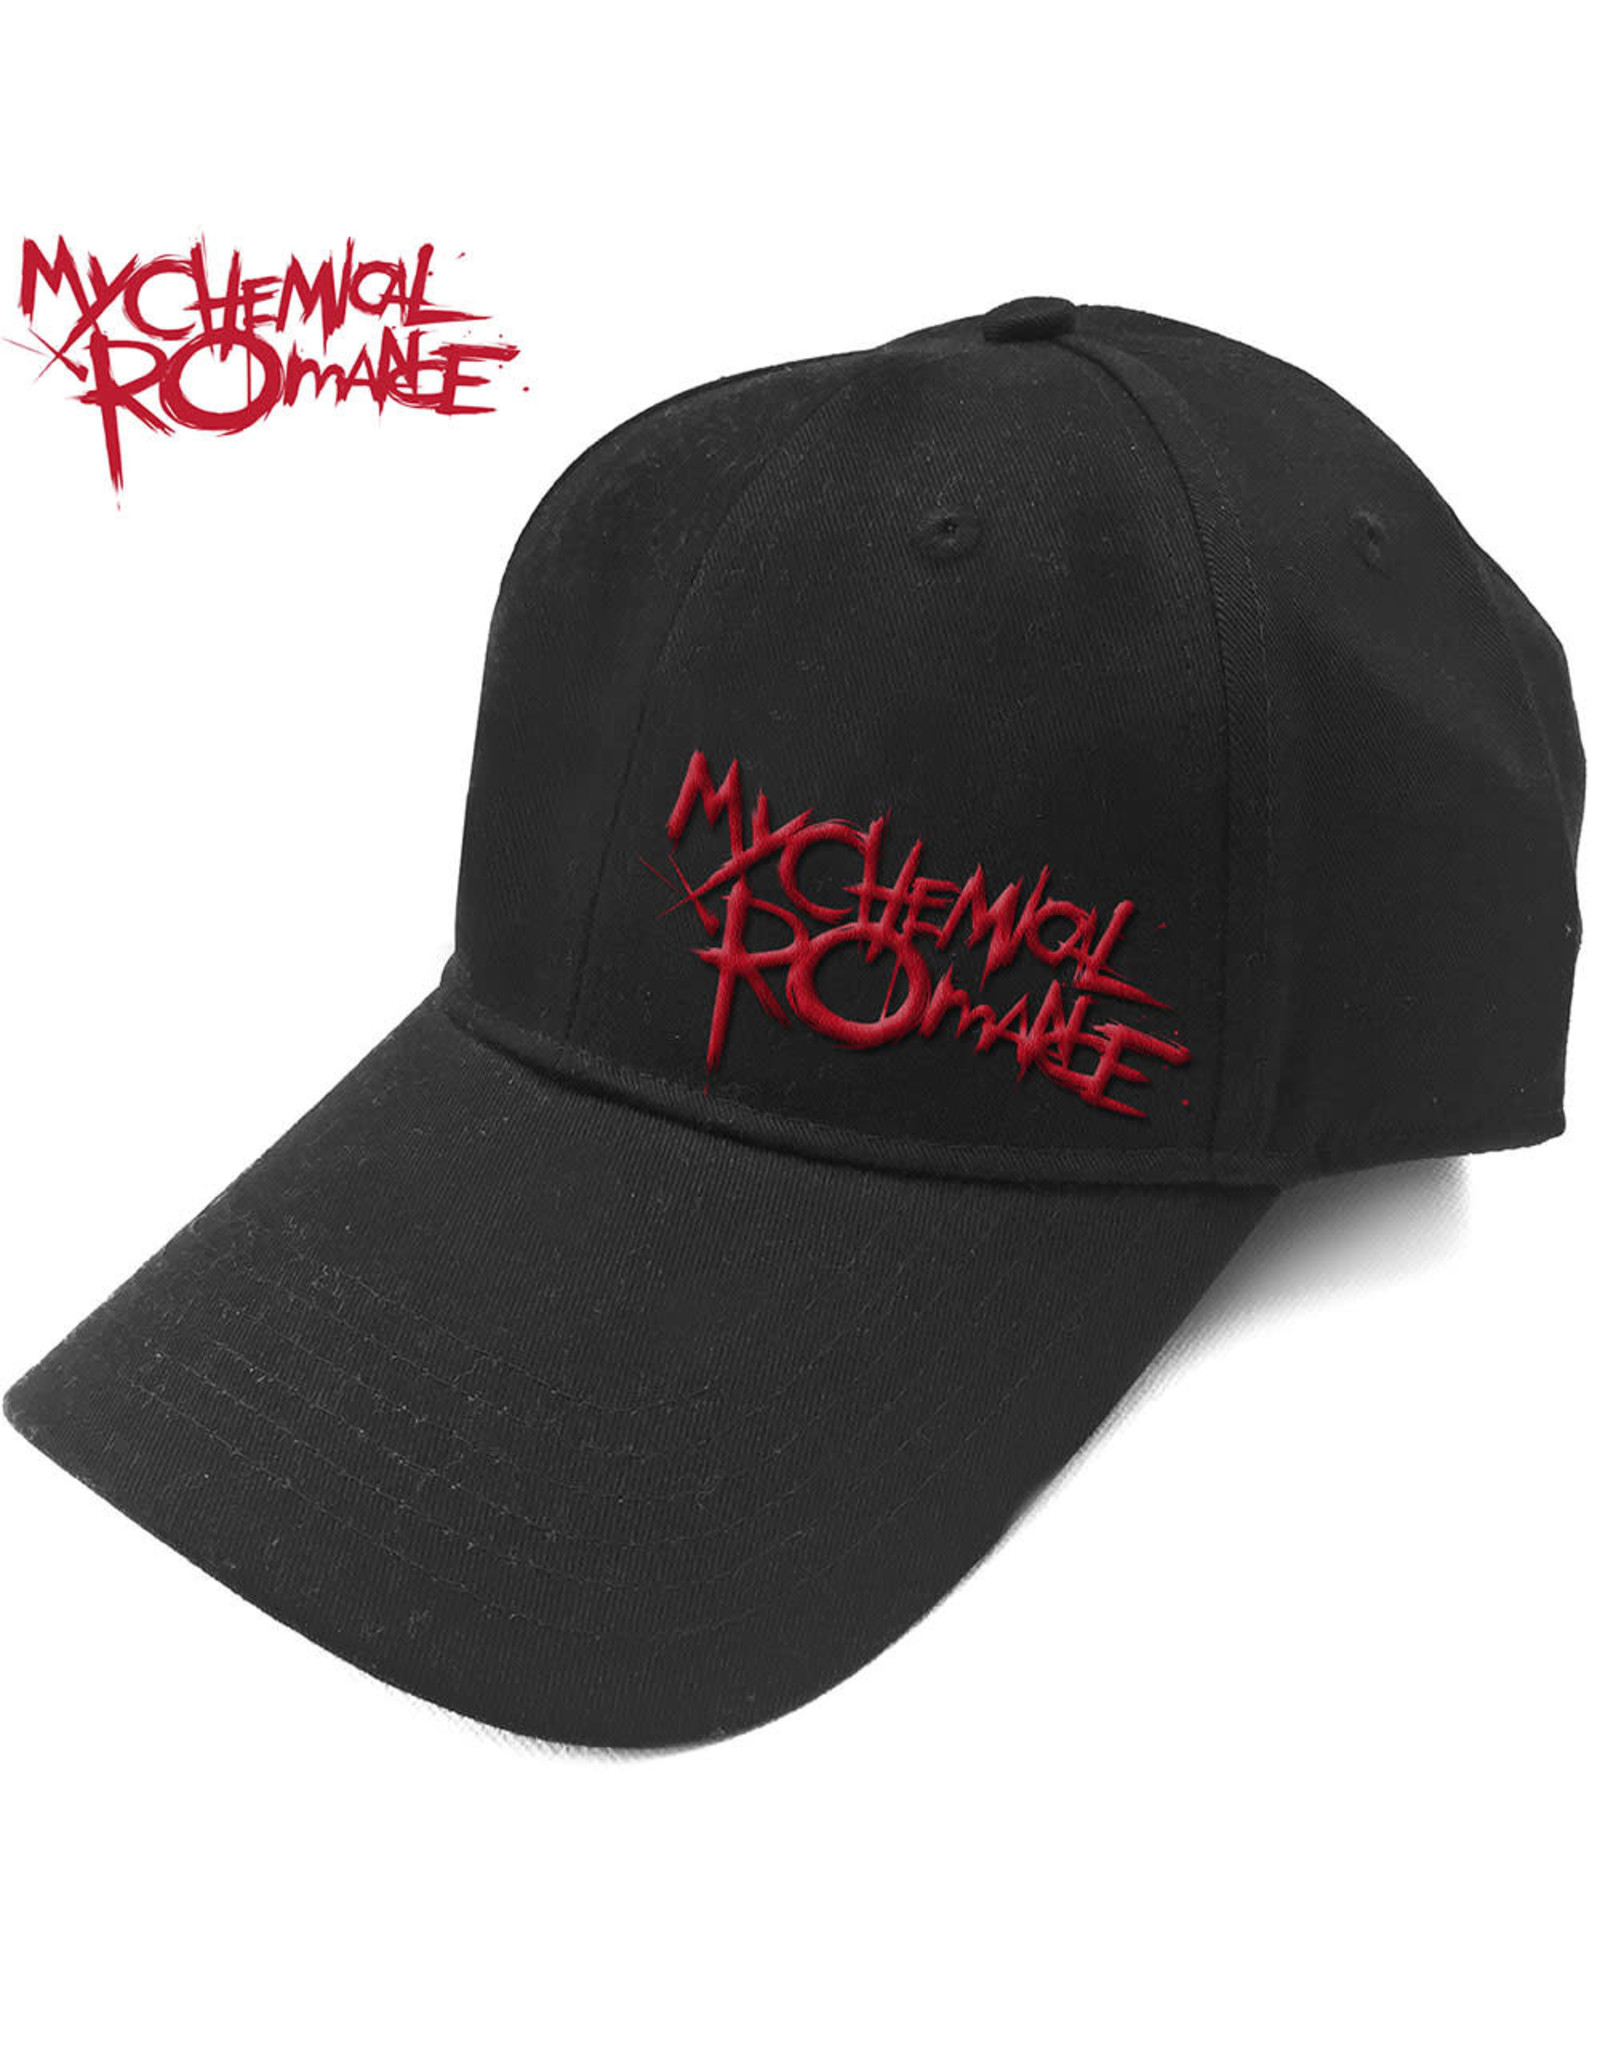 My Chemical Romance - The Black Parade Baseball Hat - Pop Music